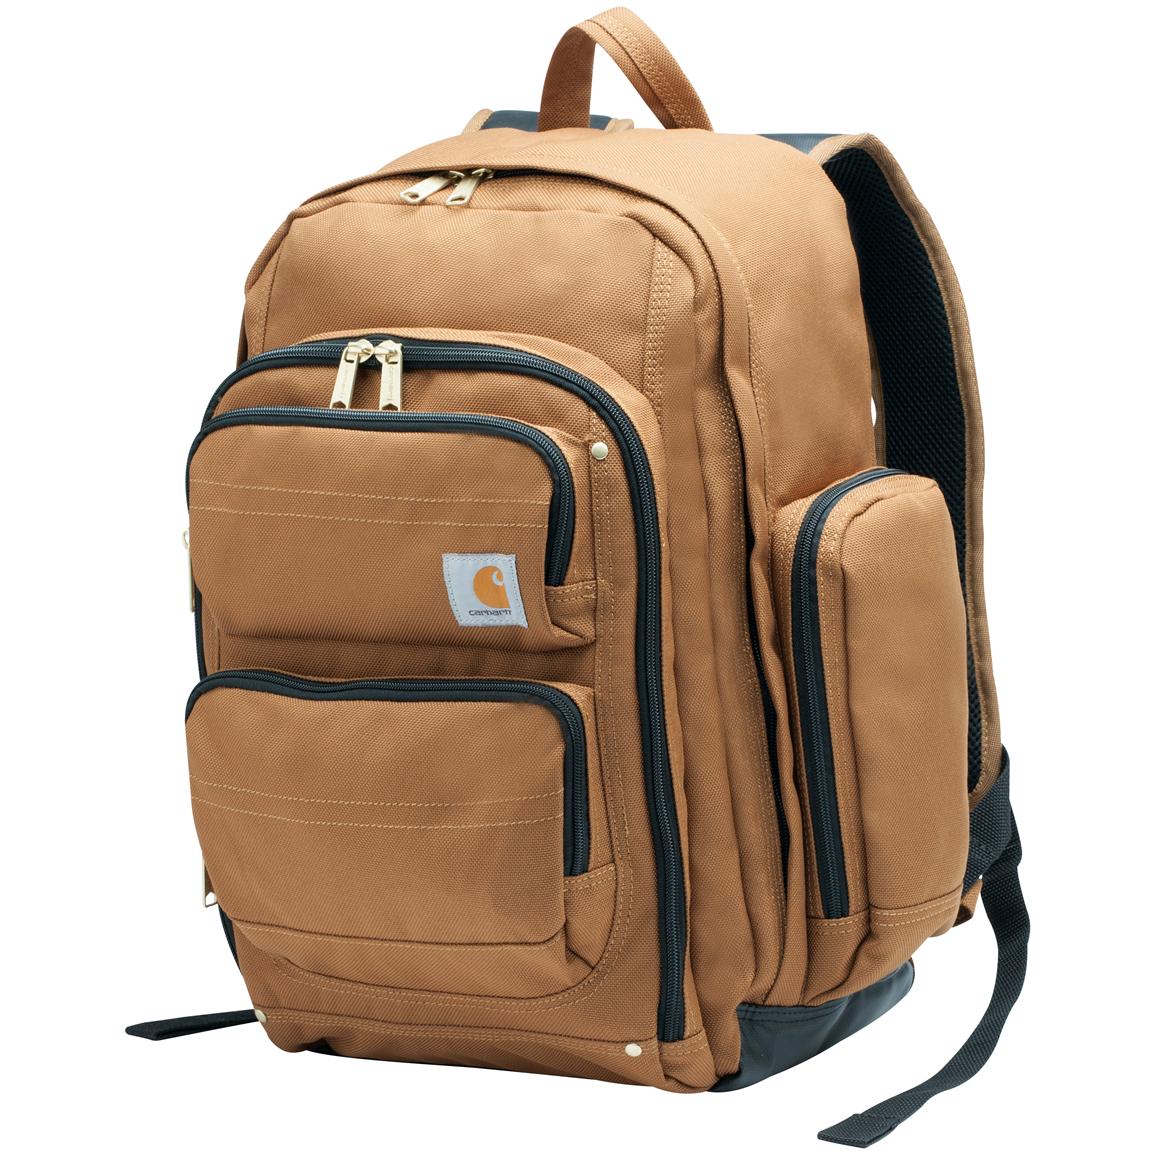 Carhartt® Legacy Deluxe Work Pack - 584438, Backpacks at Sportsman's Guide